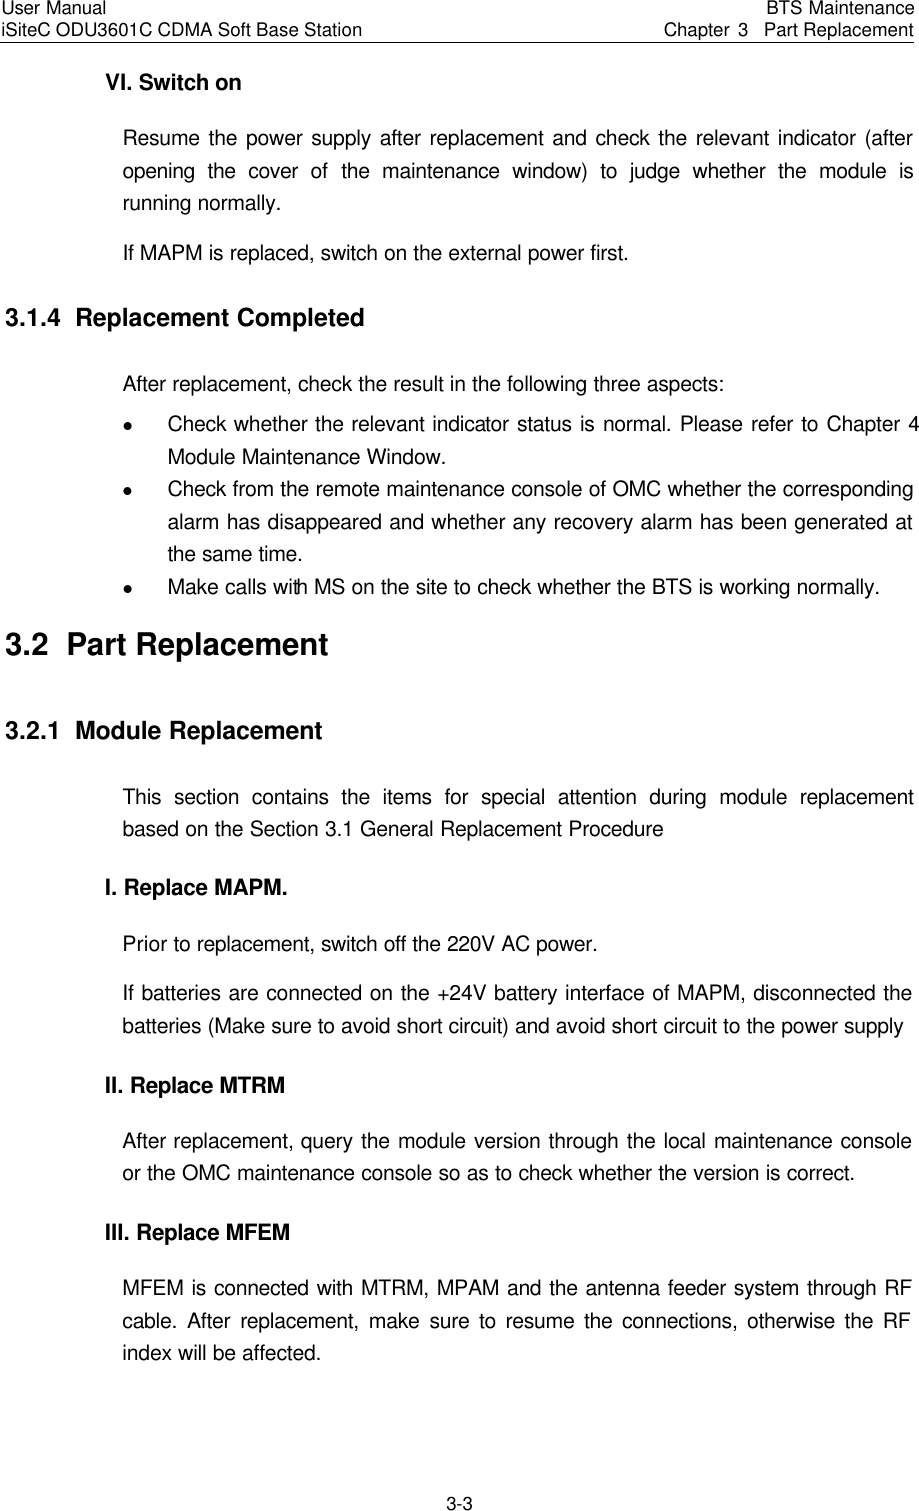 Page 94 of Huawei Technologies ODU3601C-800 CDMA Base Station User Manual 2